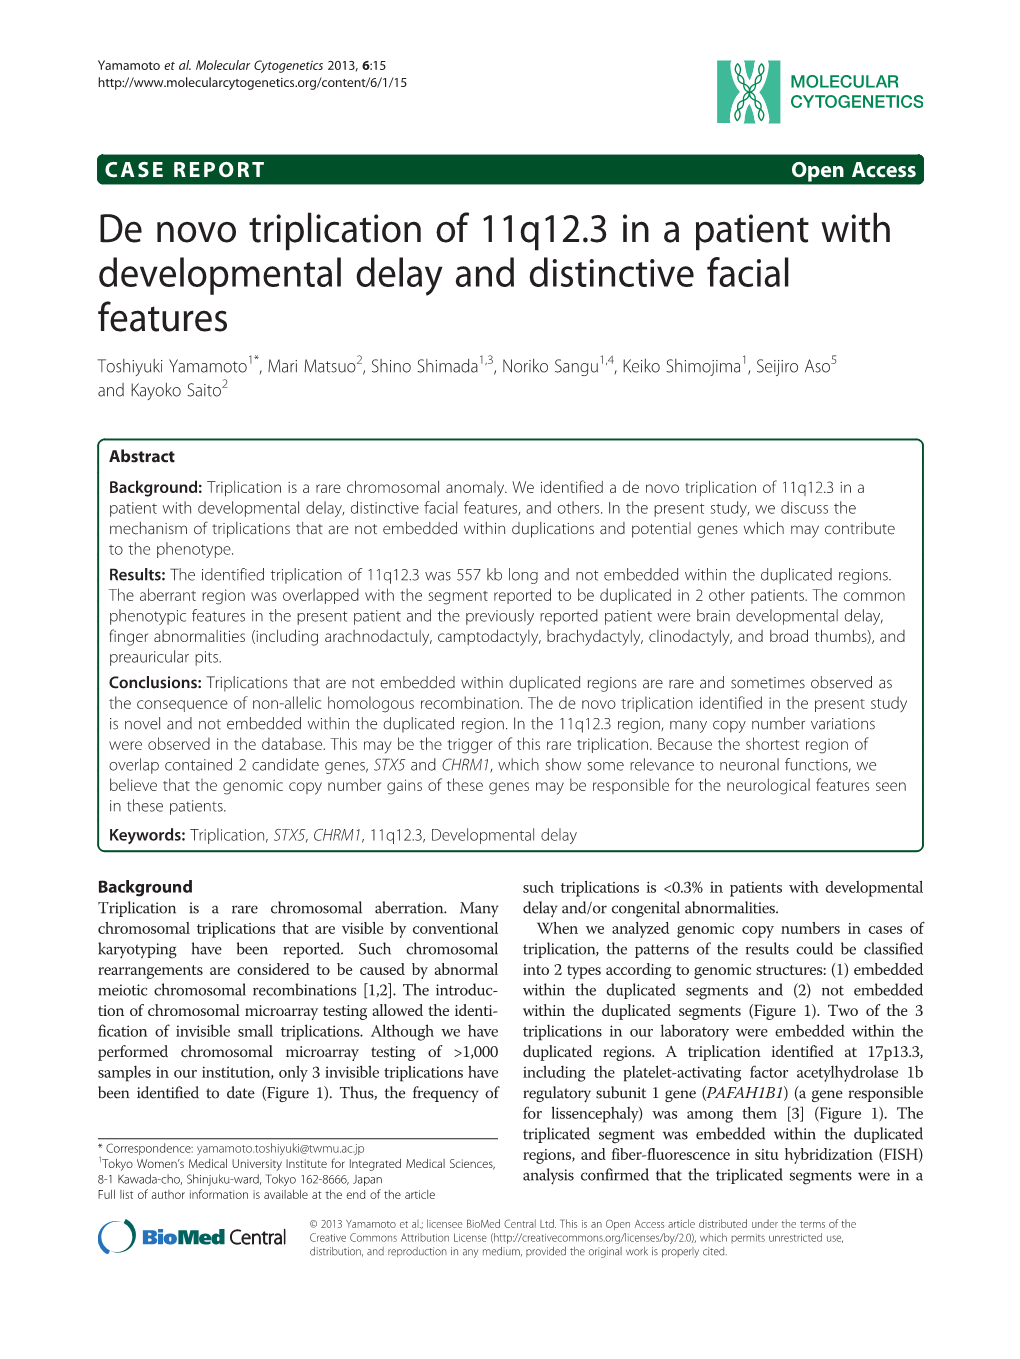 De Novo Triplication of 11Q12.3 in a Patient with Developmental Delay